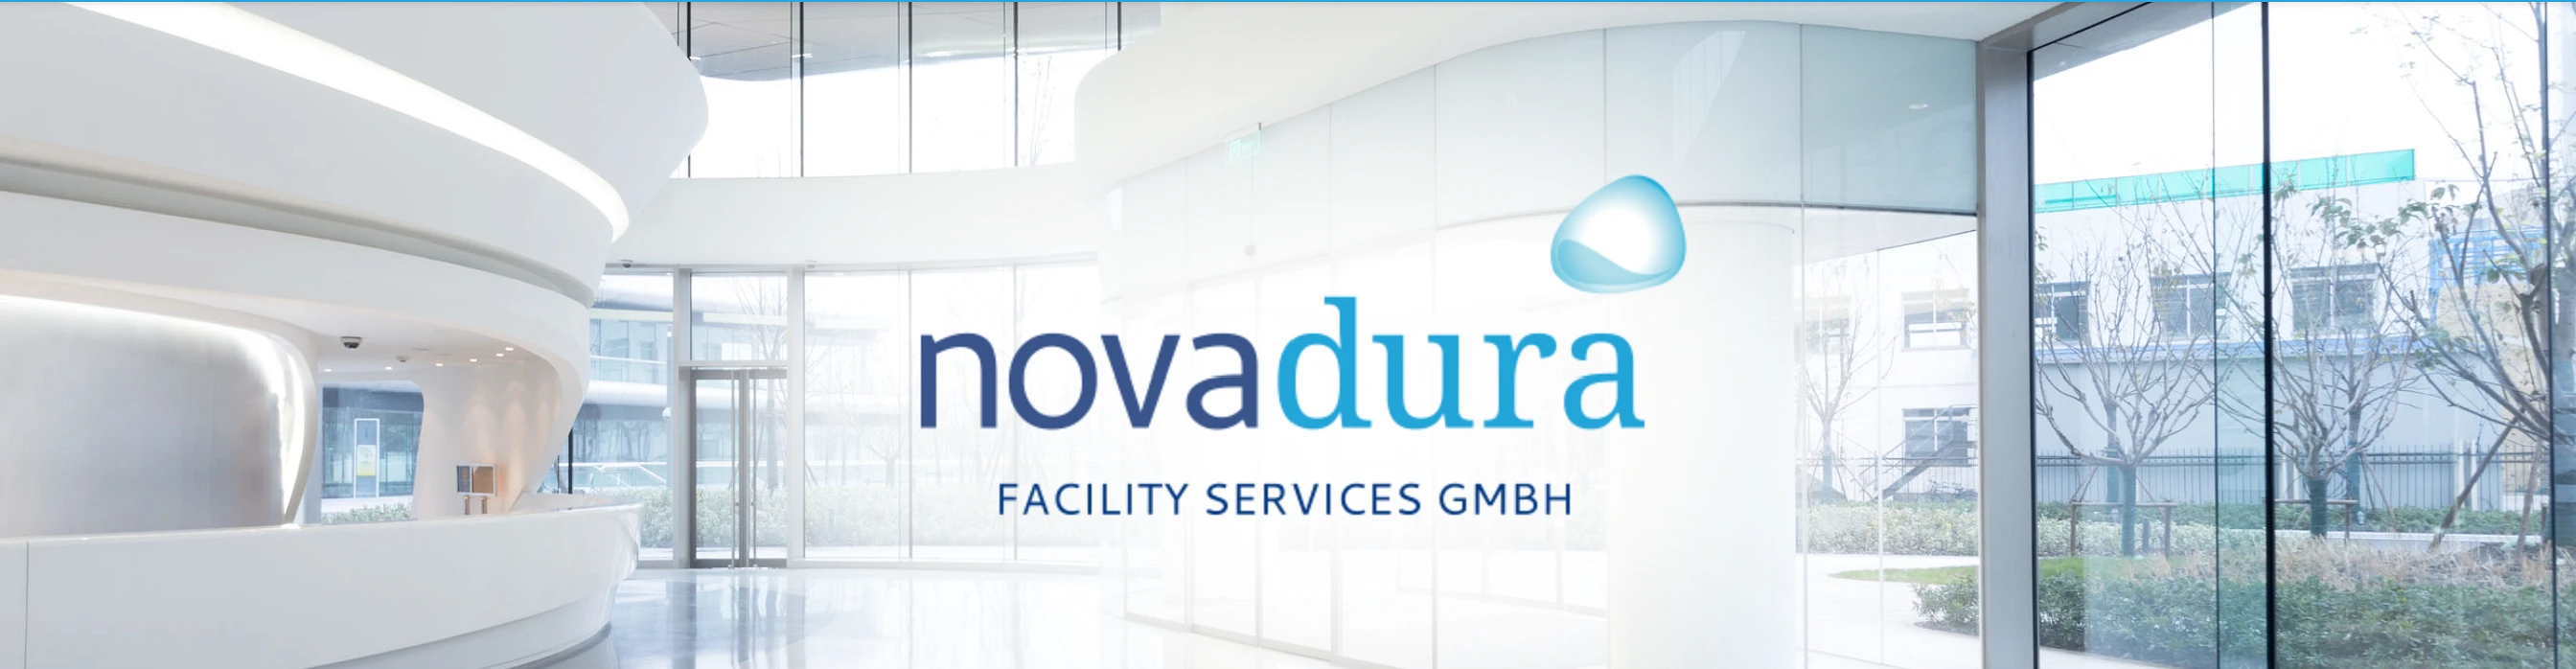 Novadura Facility Services GmbH